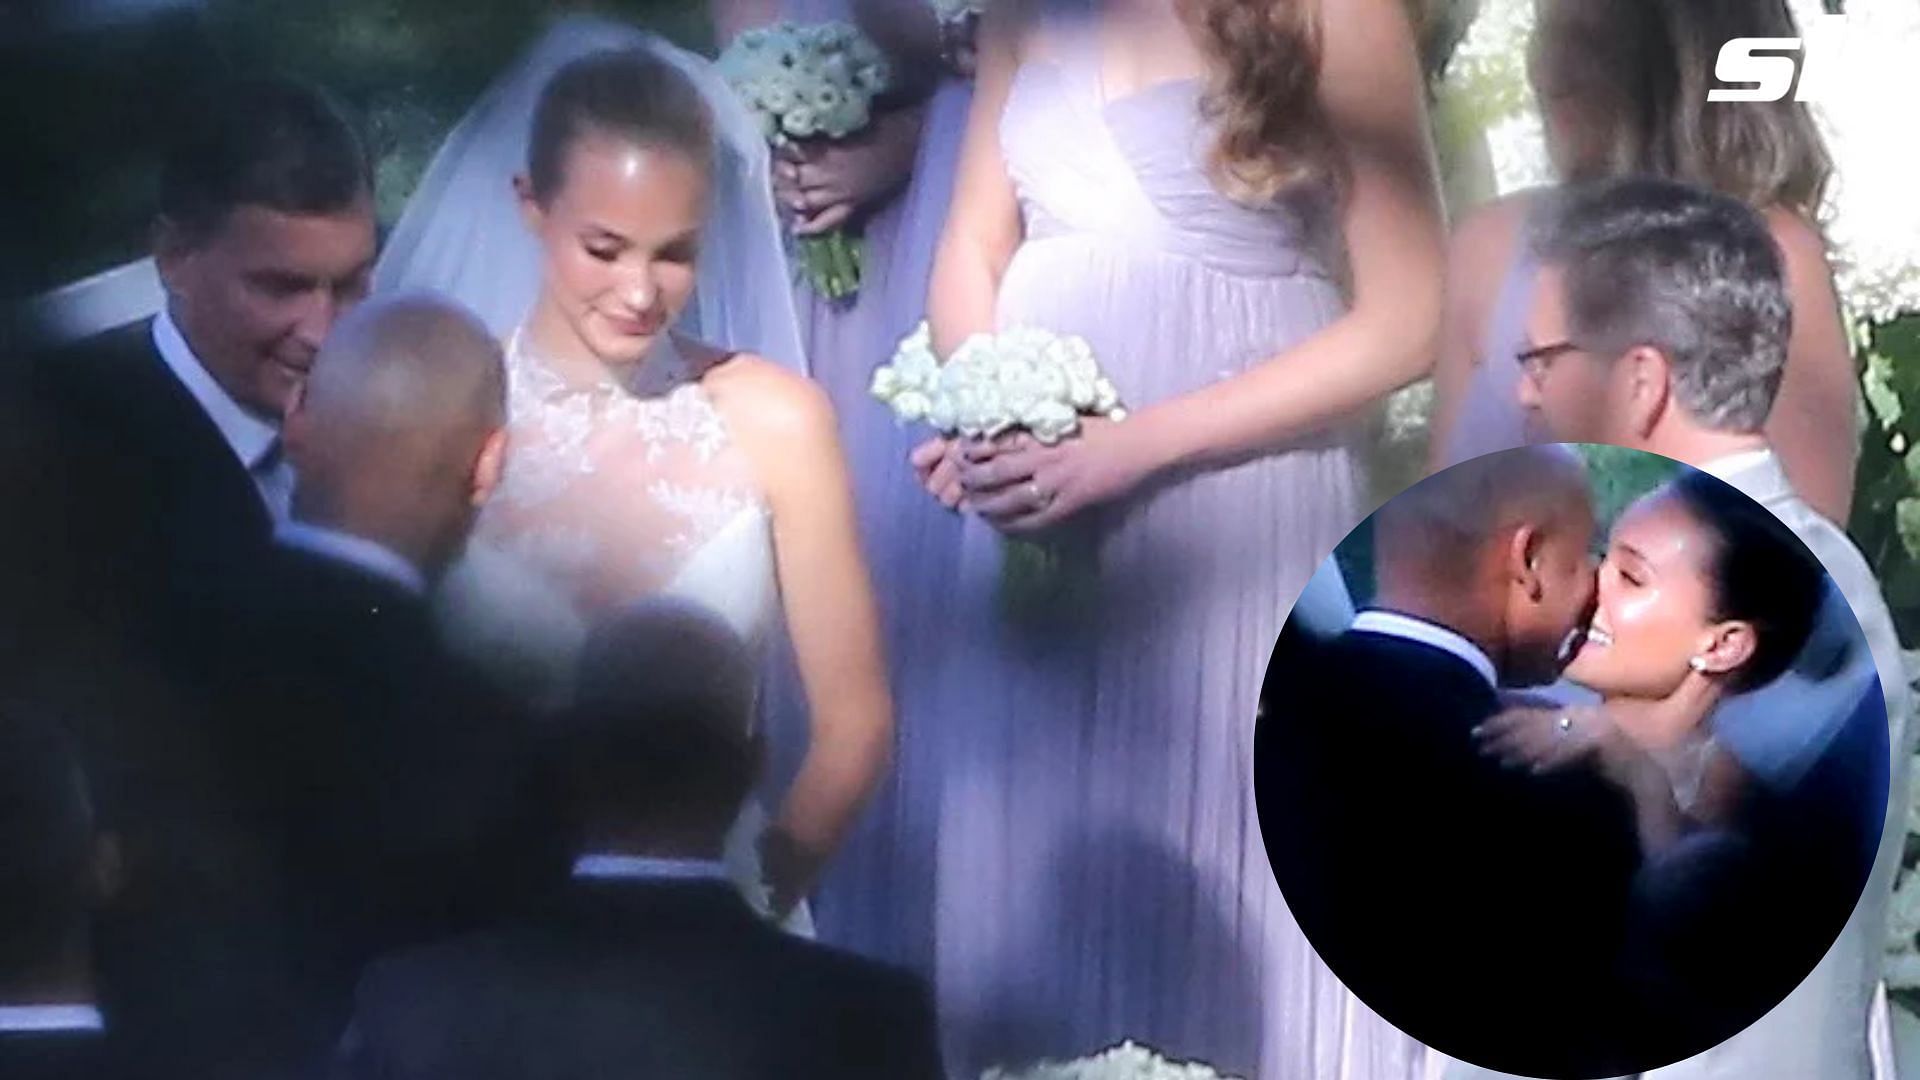 Derek Jeter Is Getting Married to Hannah Davis in July Wedding: Report